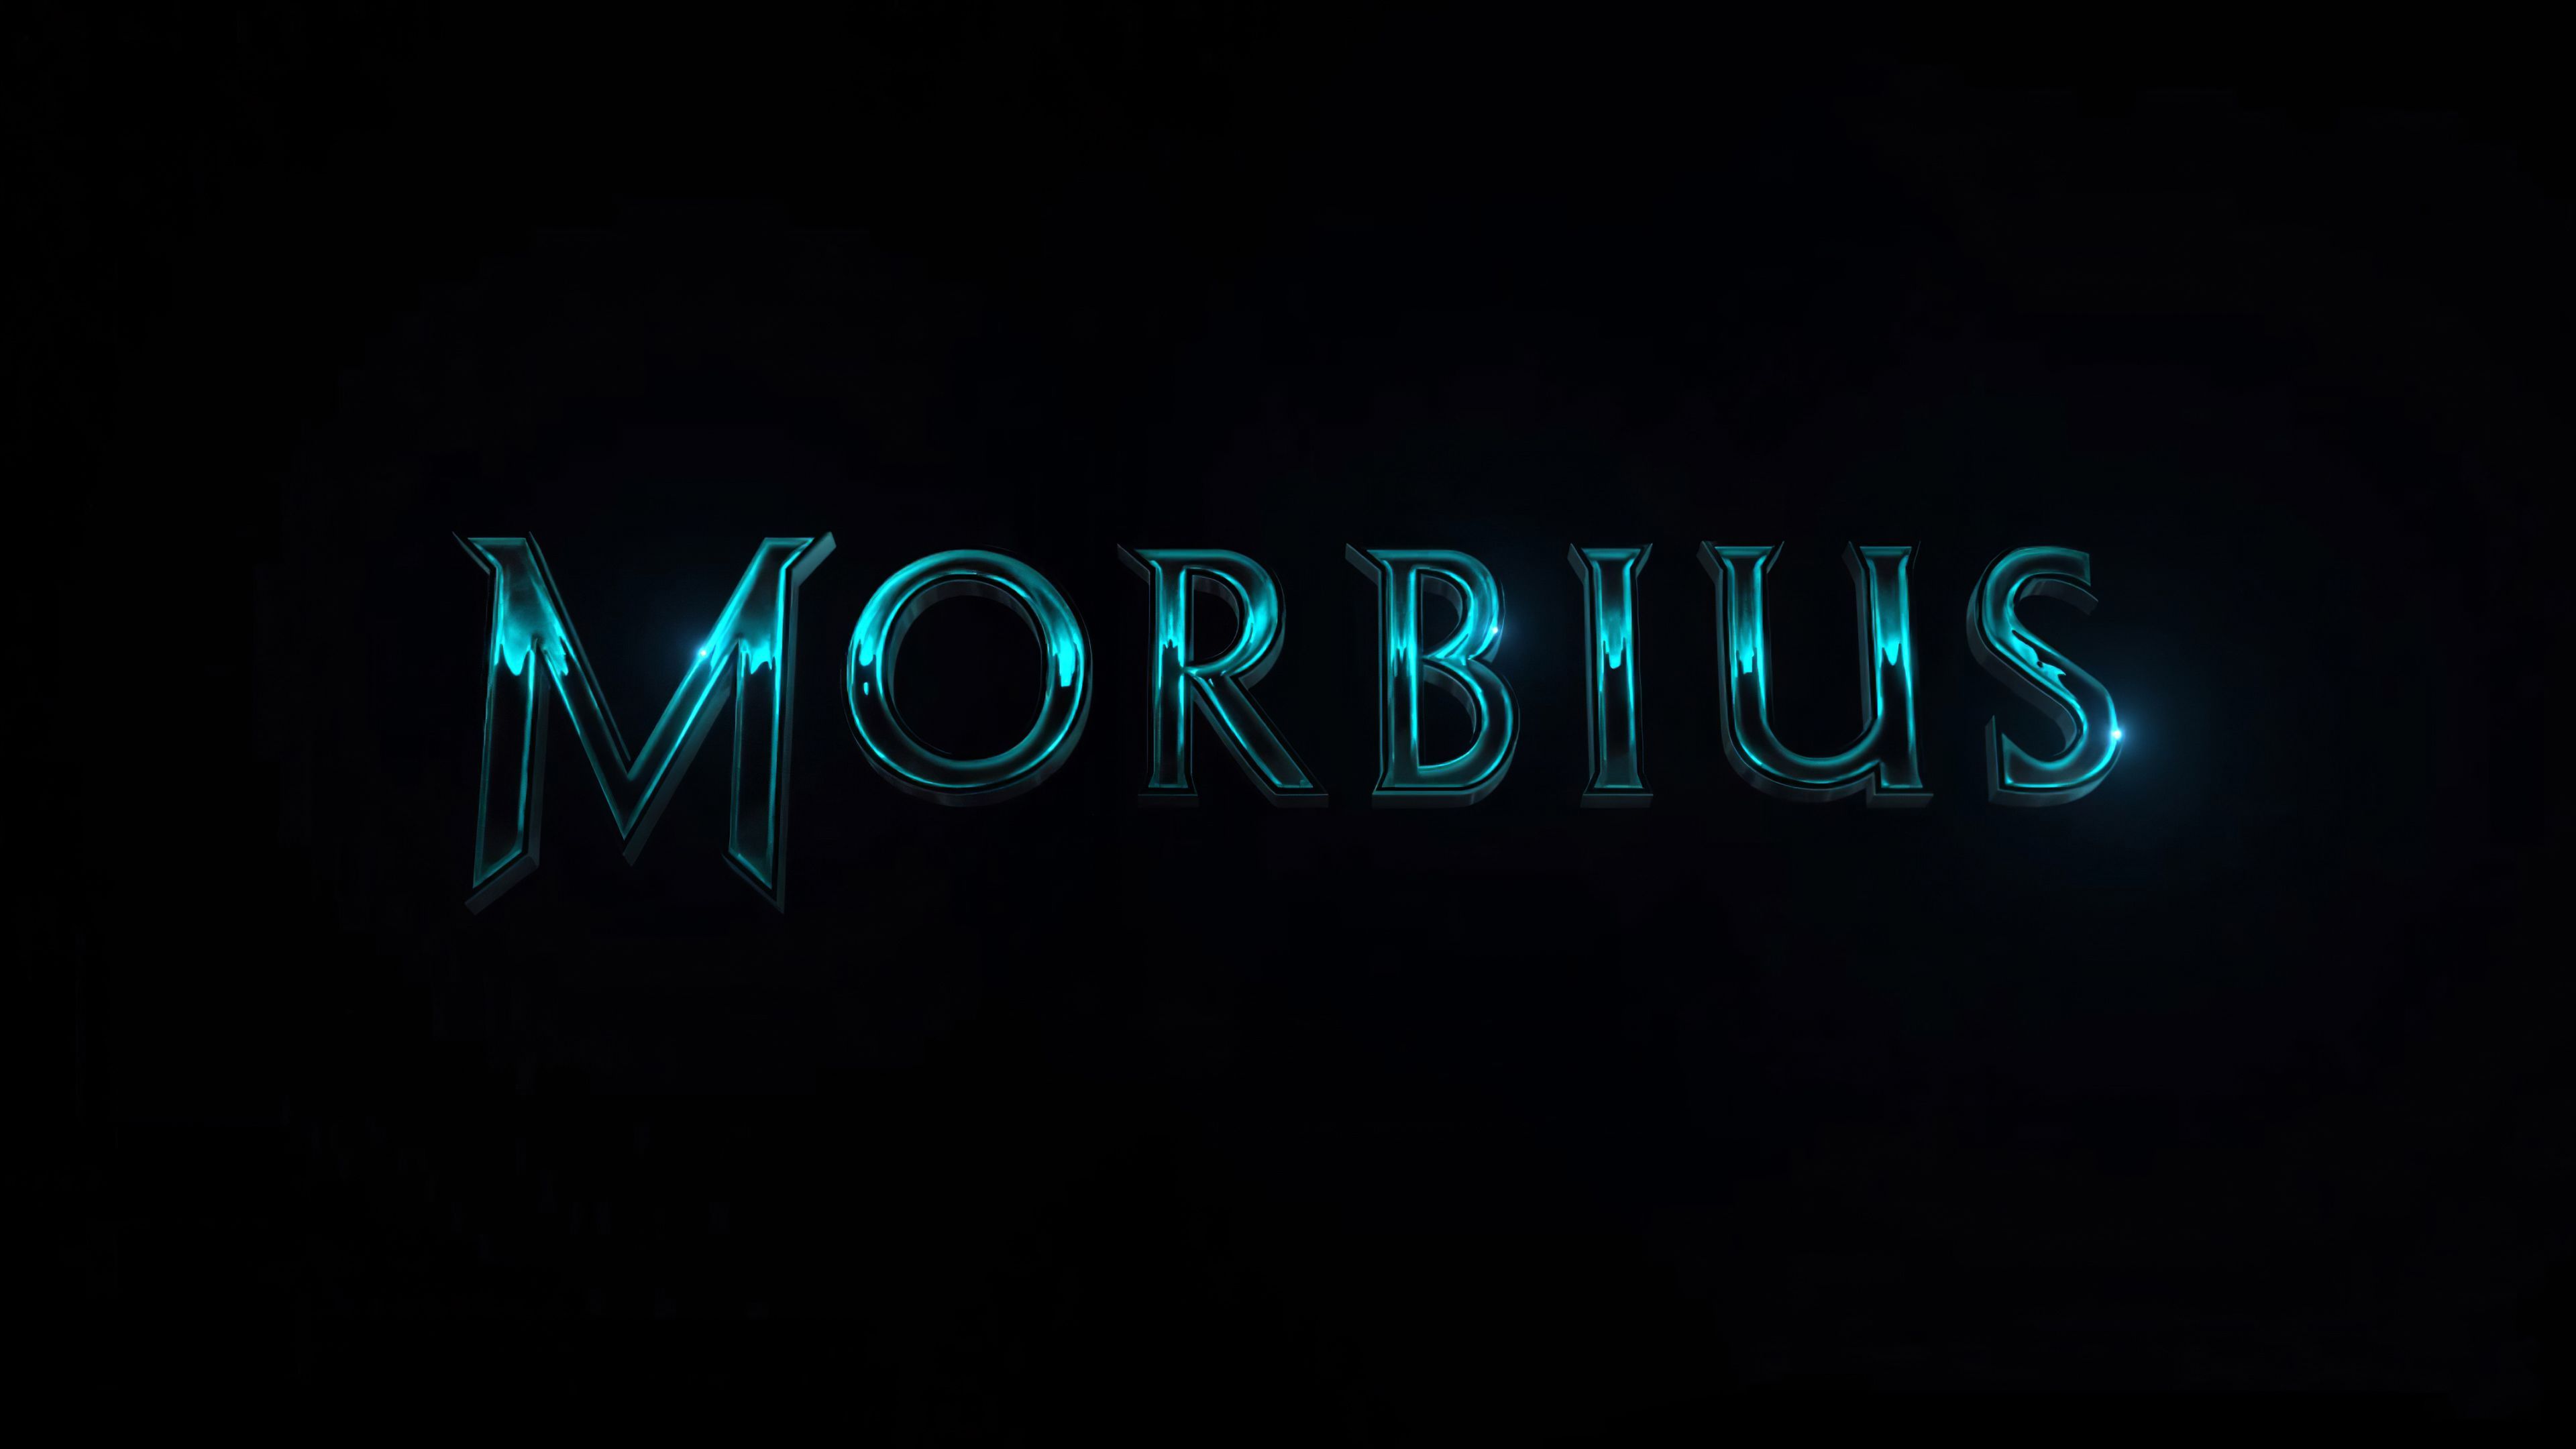 Morbius 2020 Logo Morbius 2020 Logo wallpaper 4k, Morbius 2020 Logo 4k. Jared leto, Joker pics, Marvel